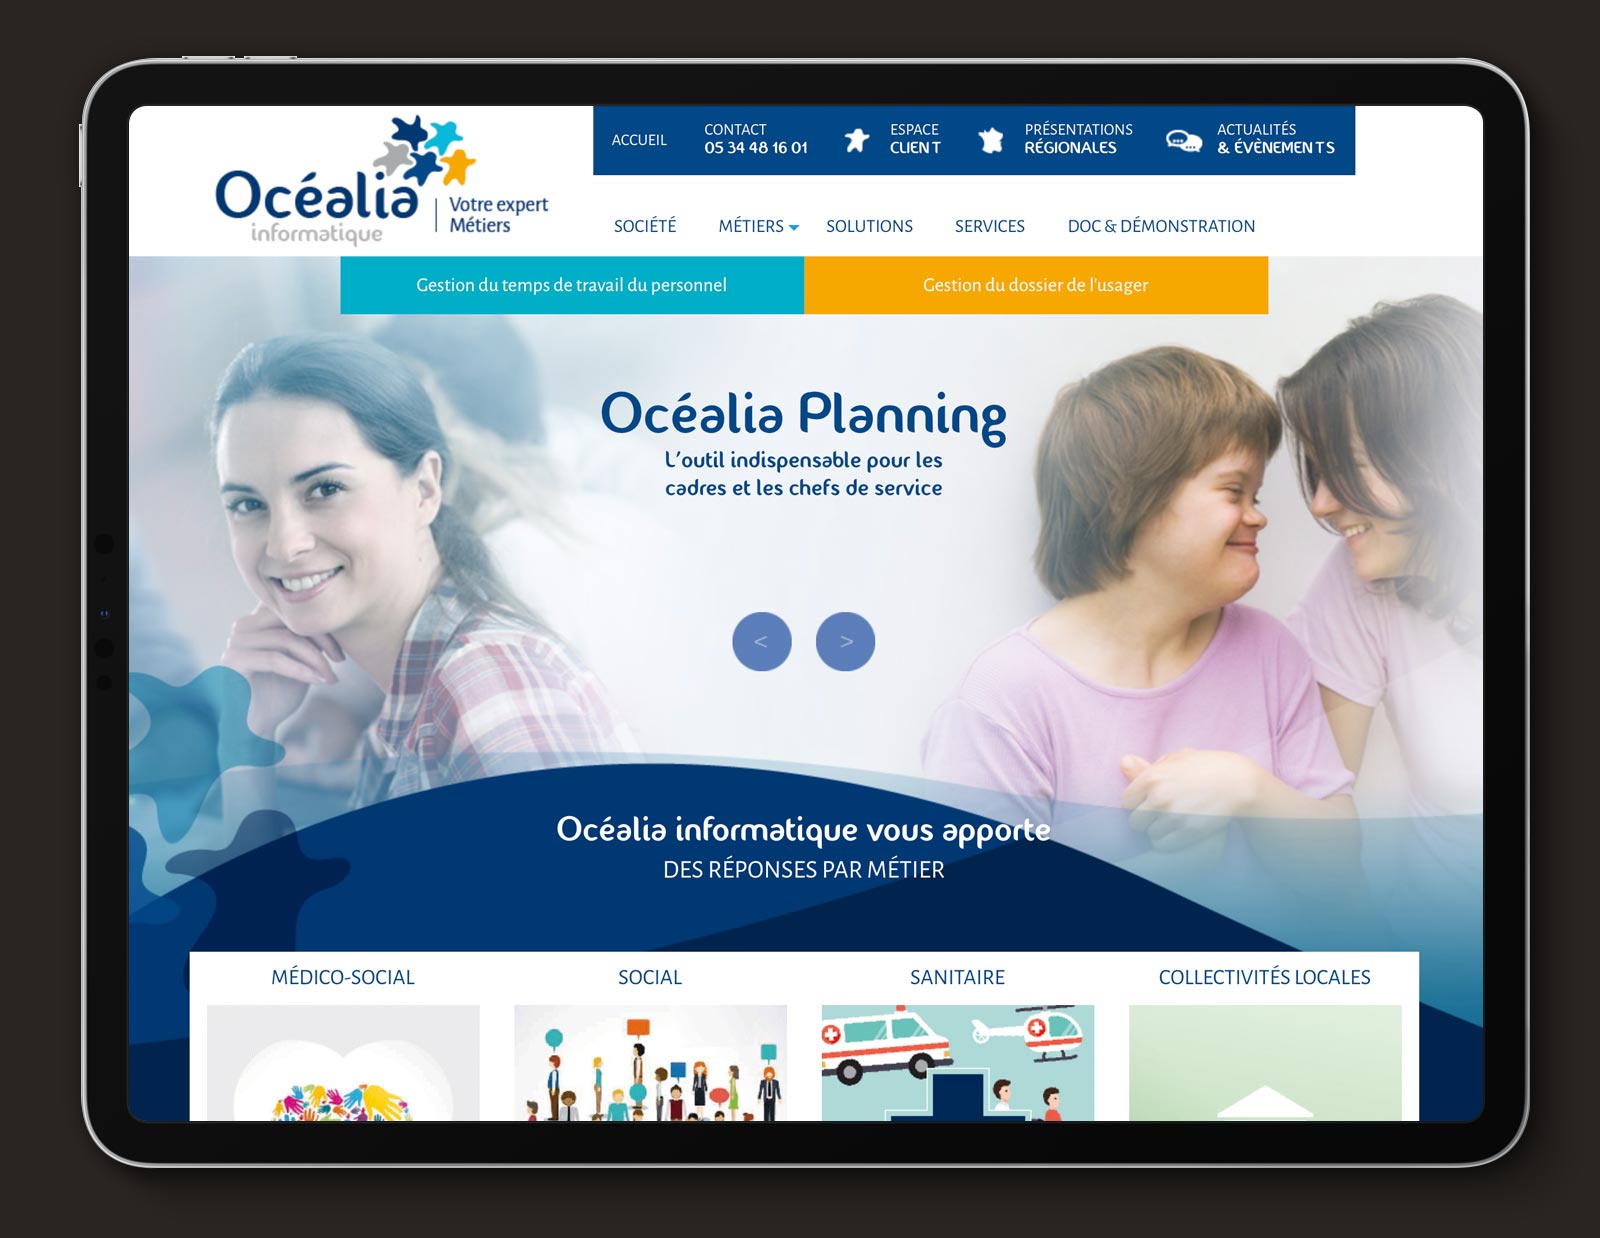 designea-communication-entreprise-site-web-style-corporate-ocealia1.jpg